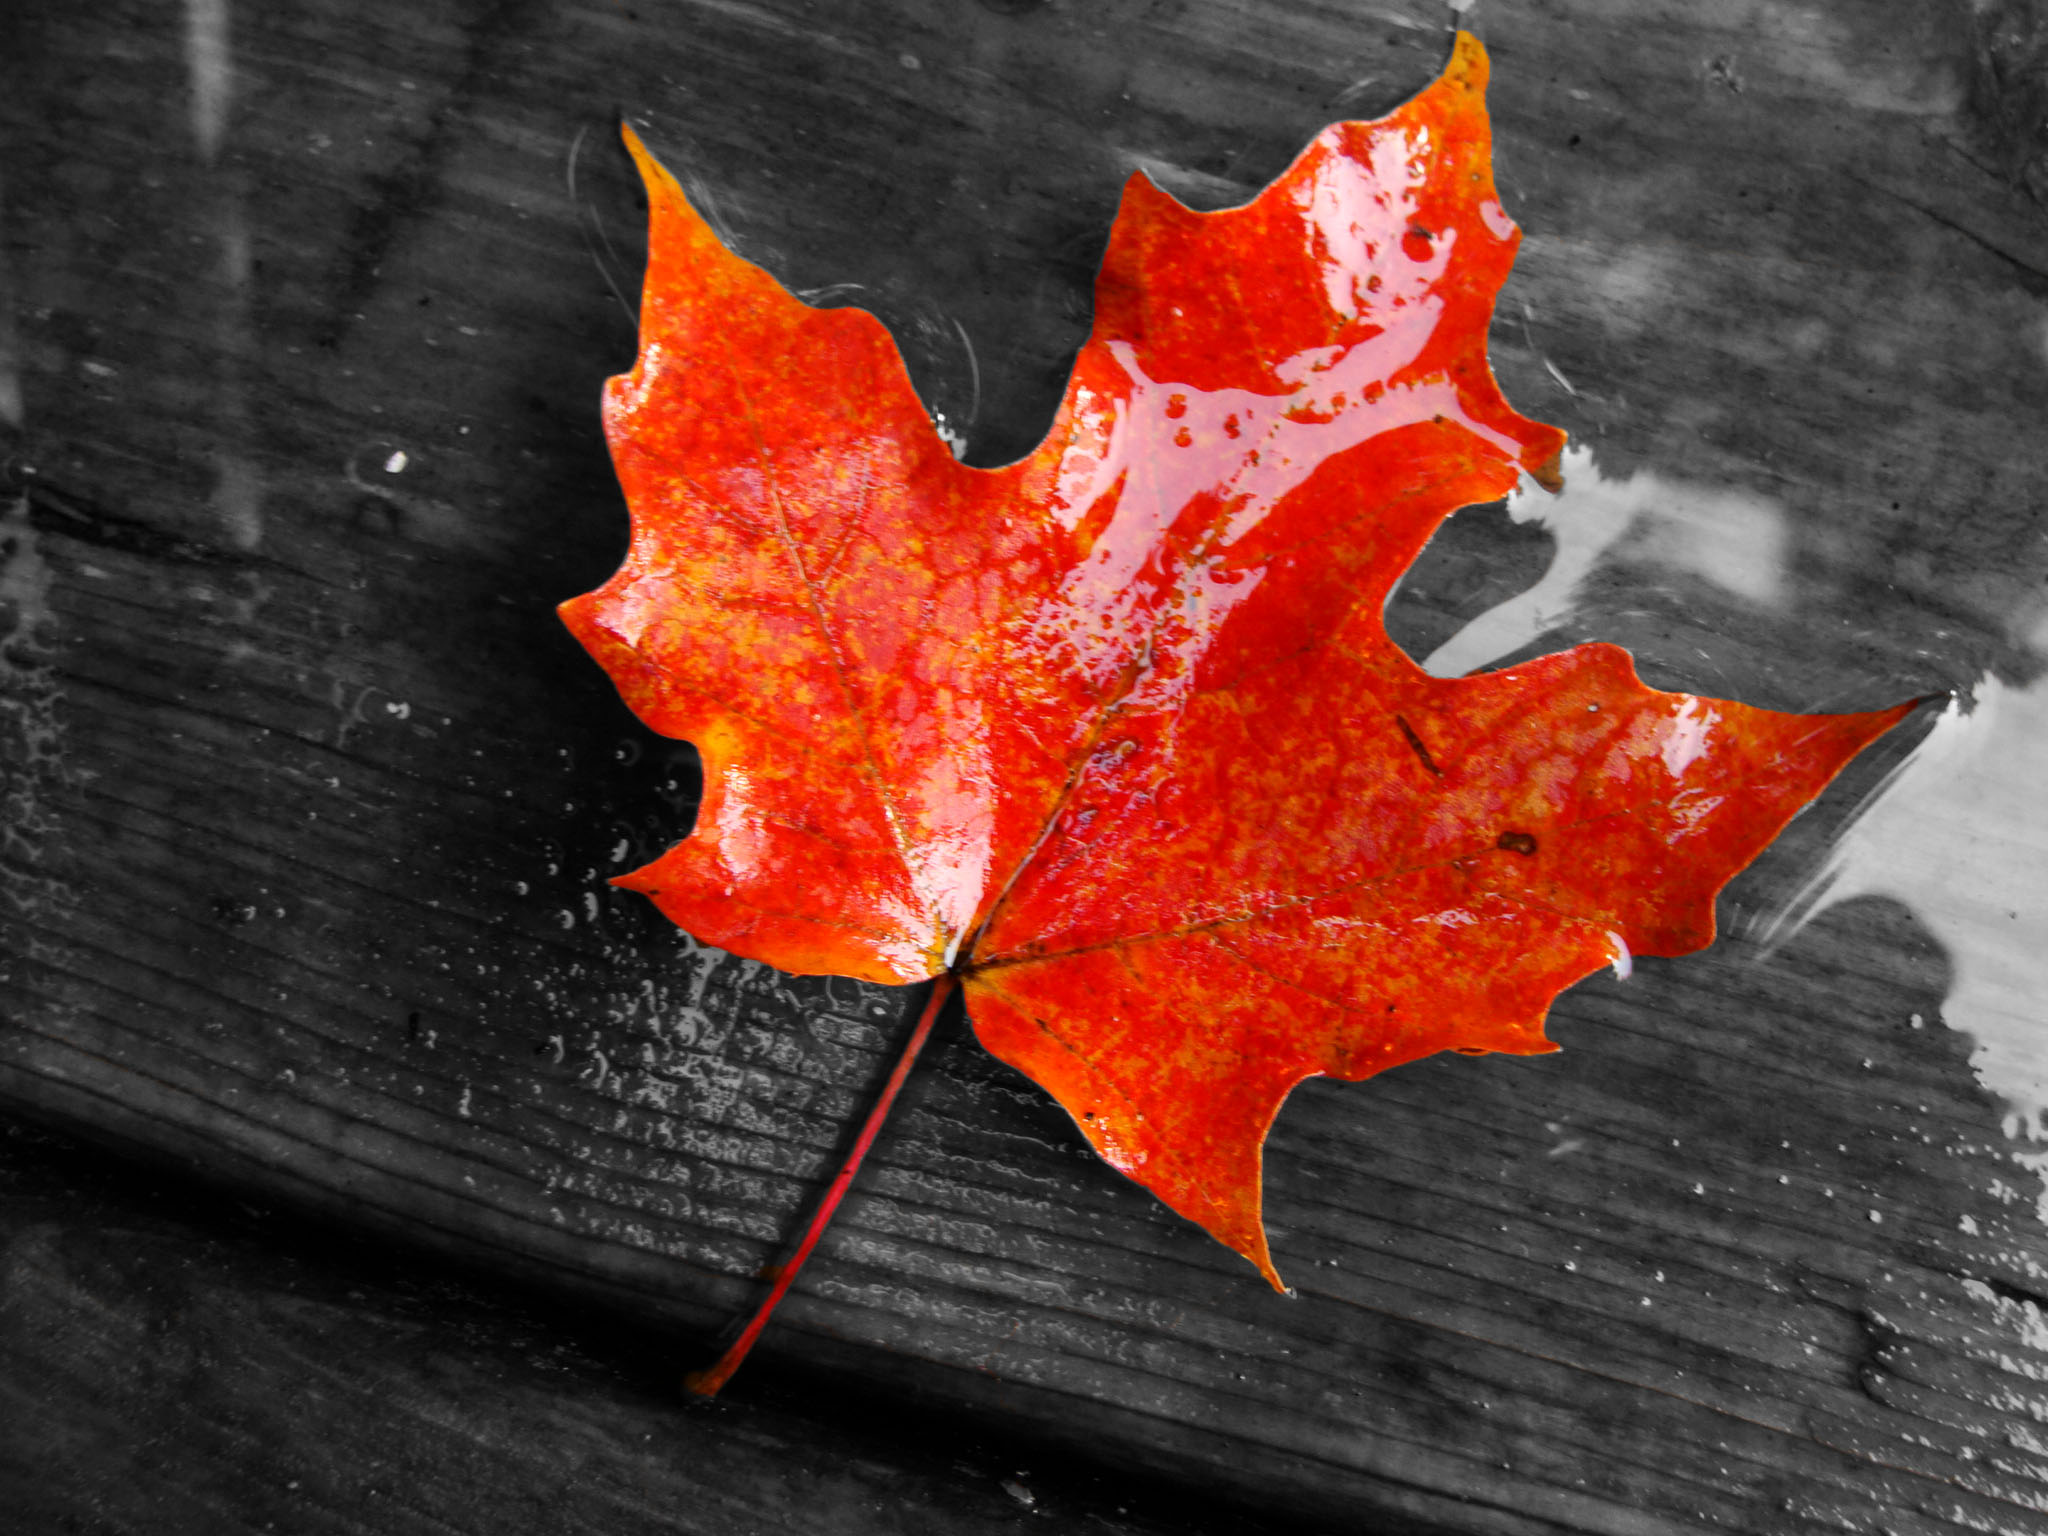 Maple Leaf Desktop Wallpaper